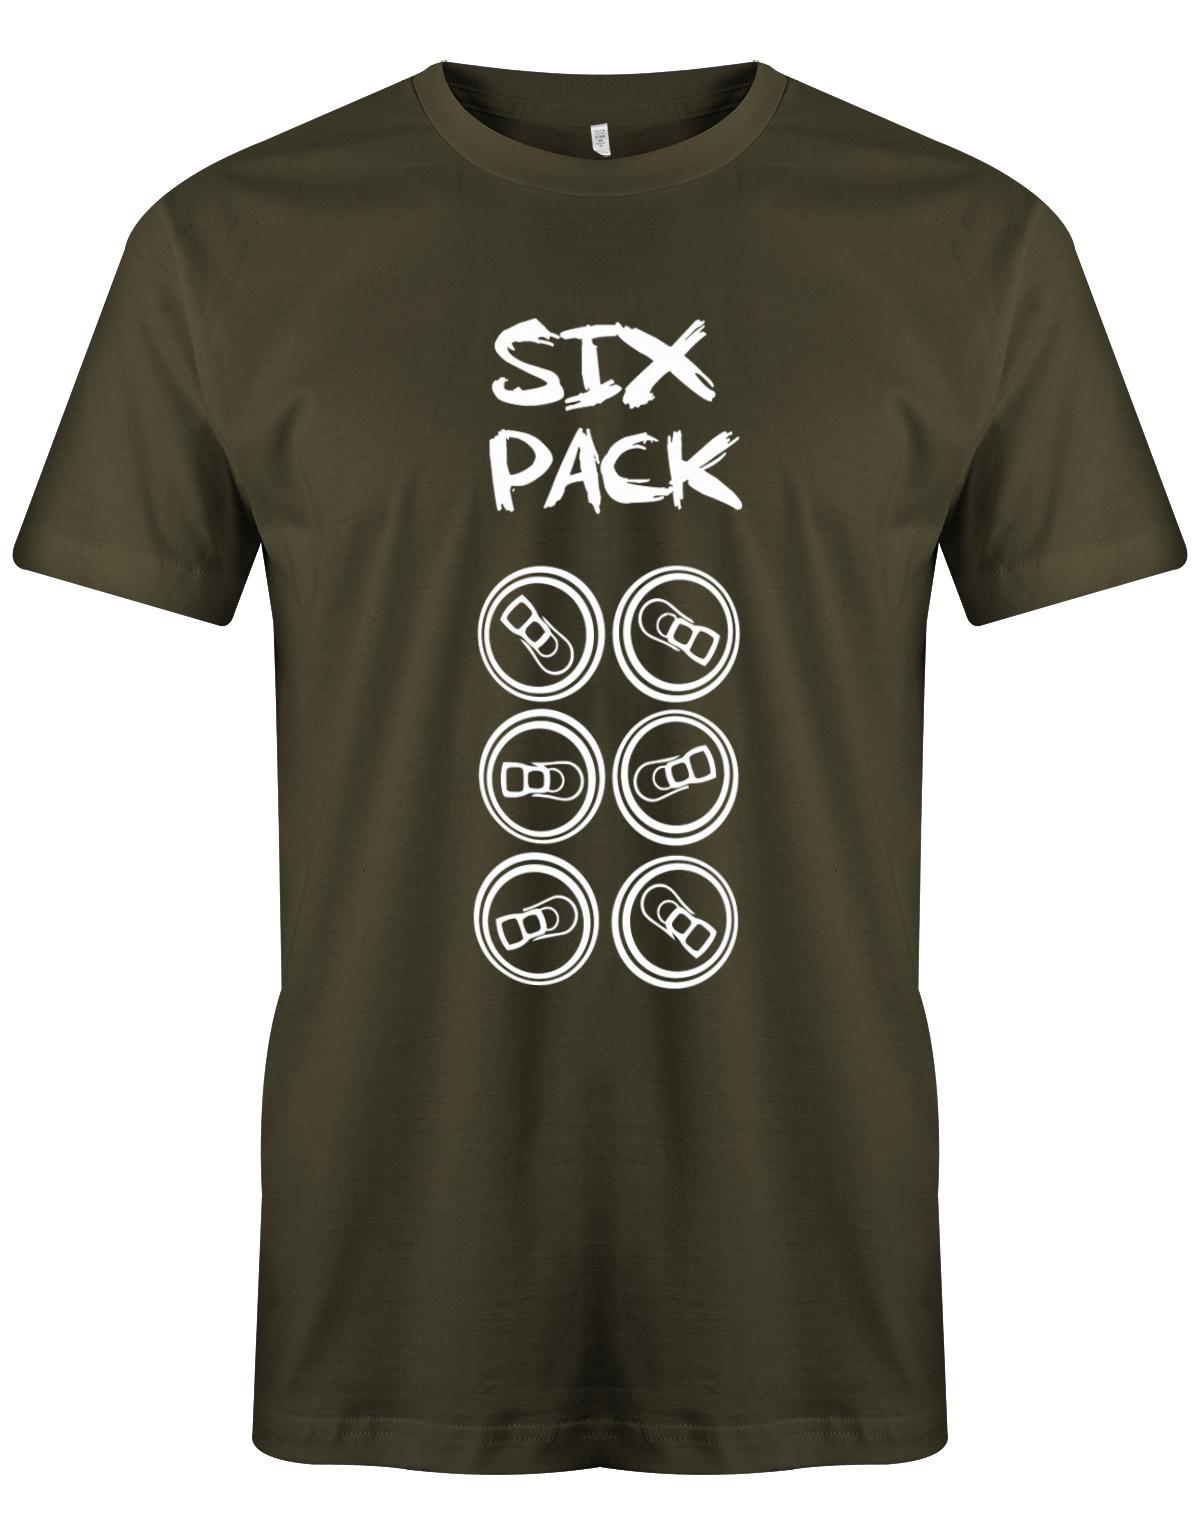 Sixpack-Bierdosen-Herren-Shirt-Army